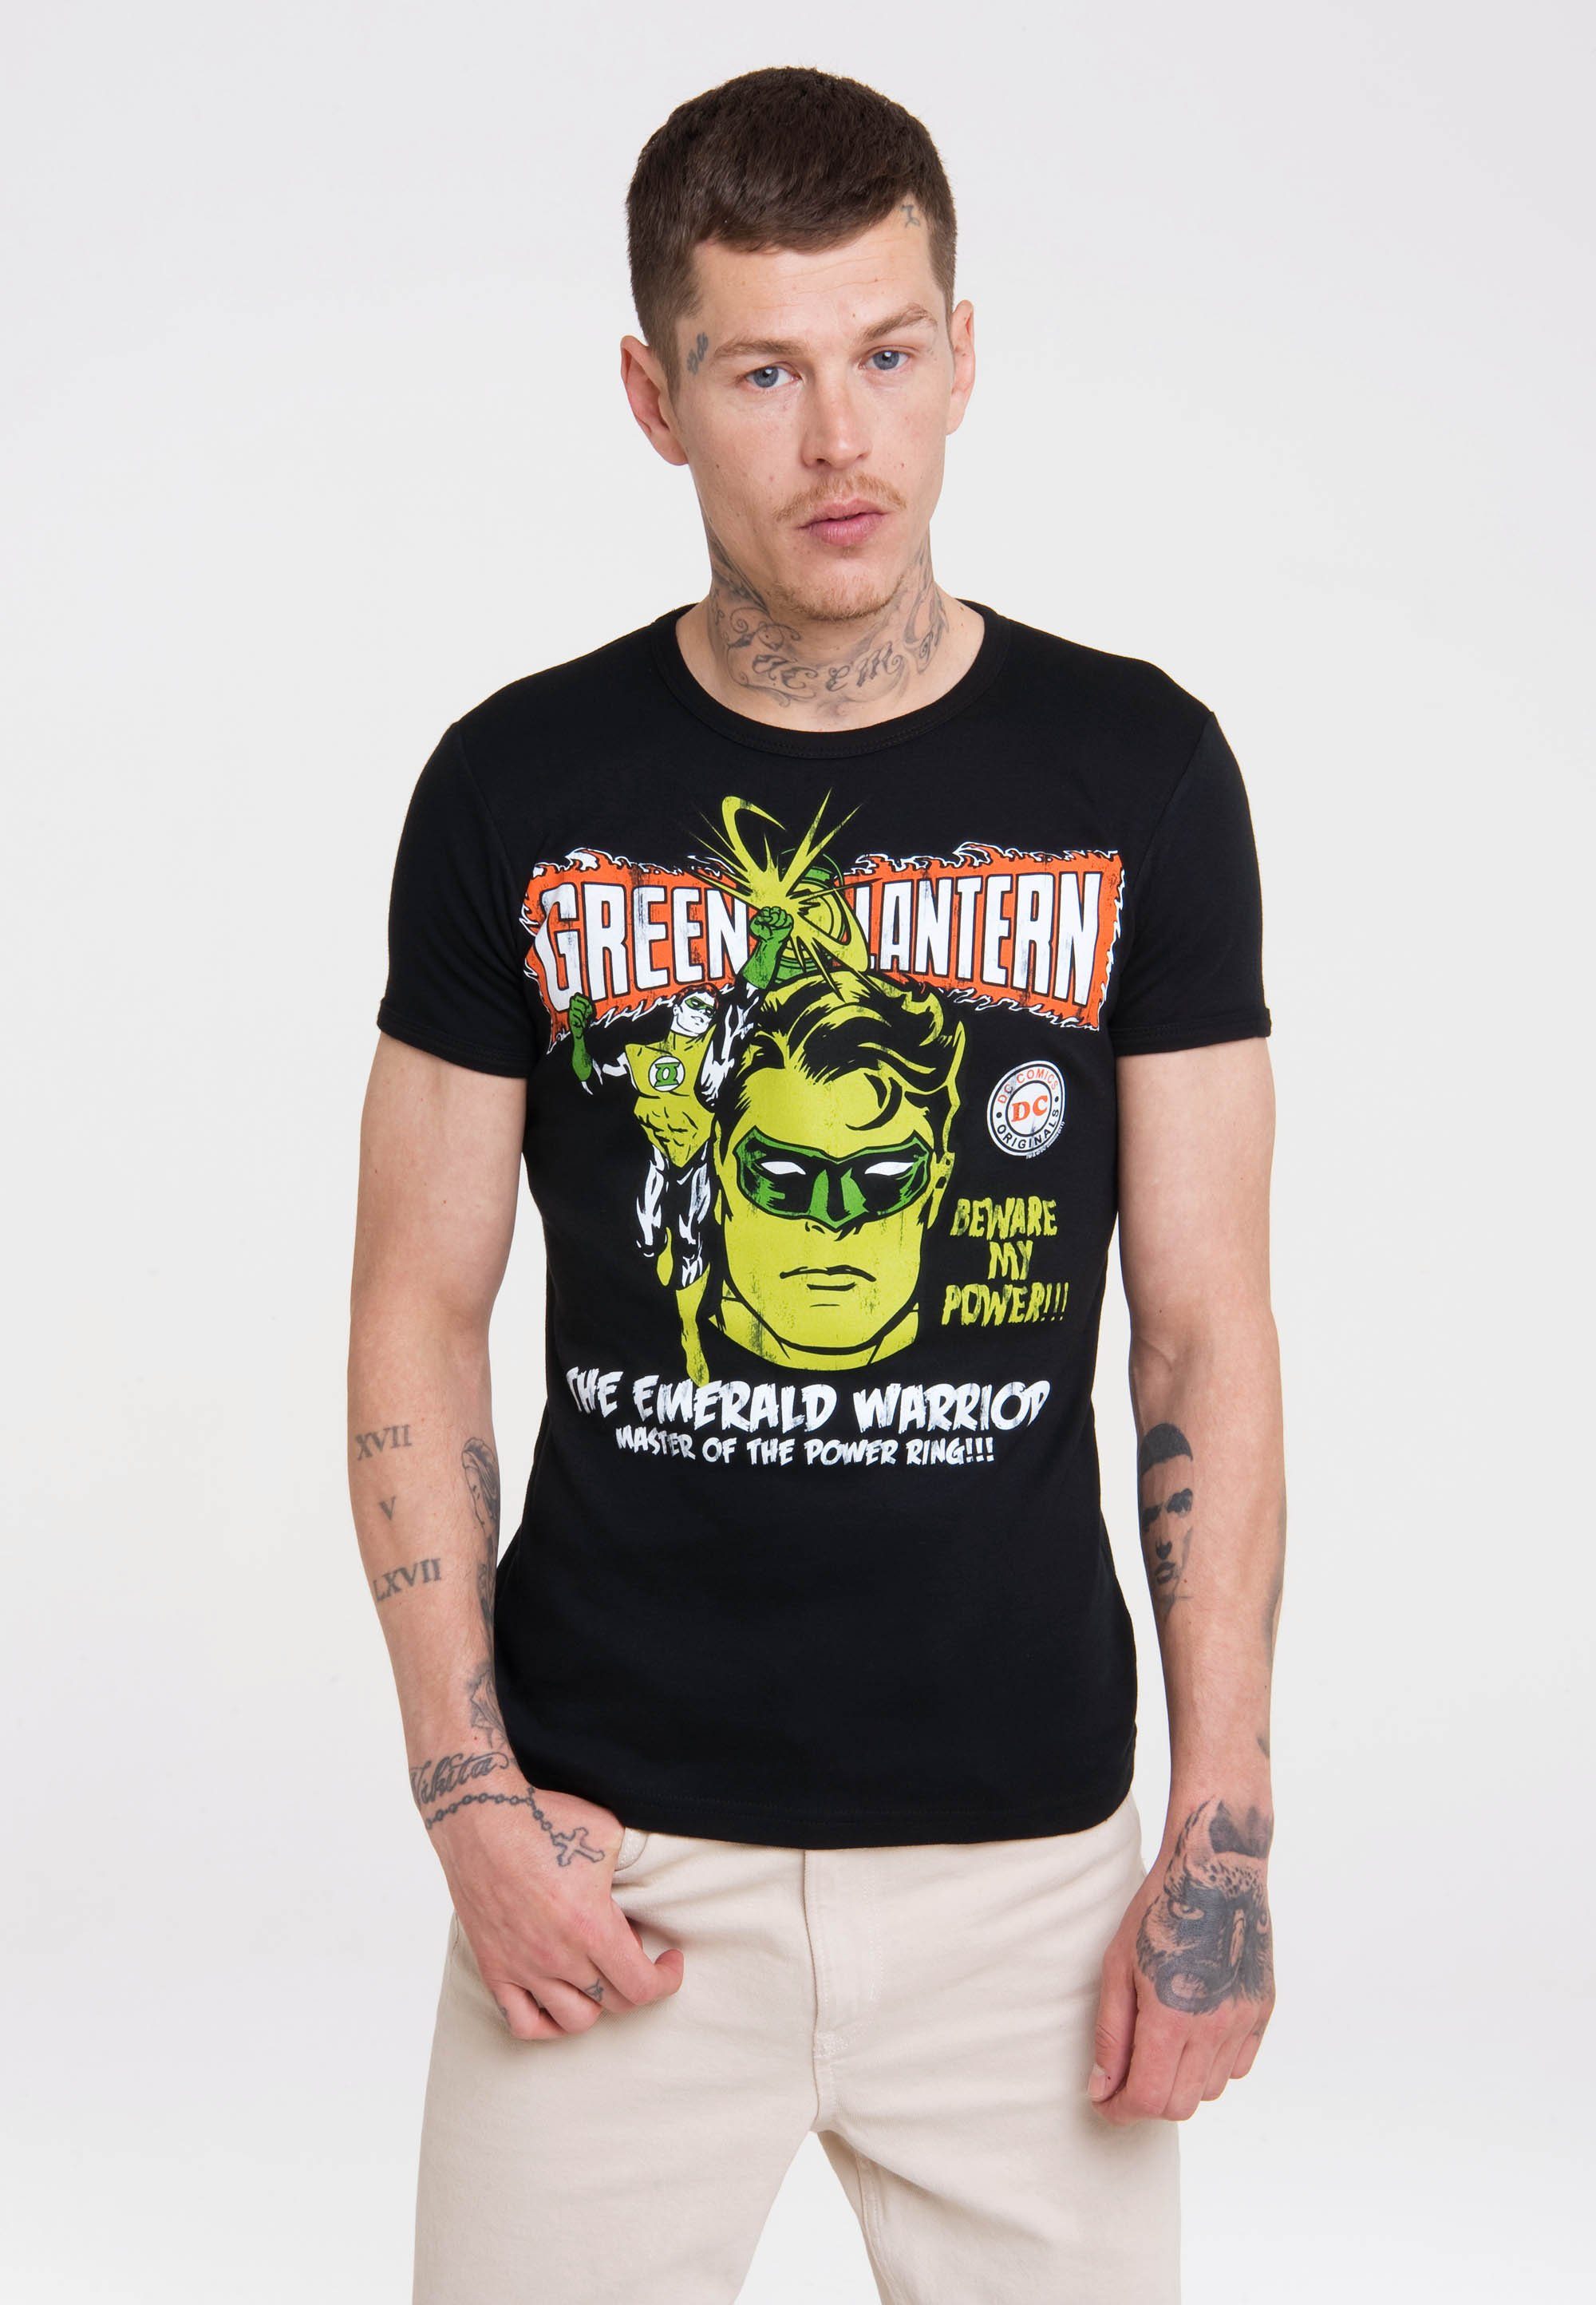 T-Shirt mit Green DC Lantern Power LOGOSHIRT Green schwarz Lantern-Print -